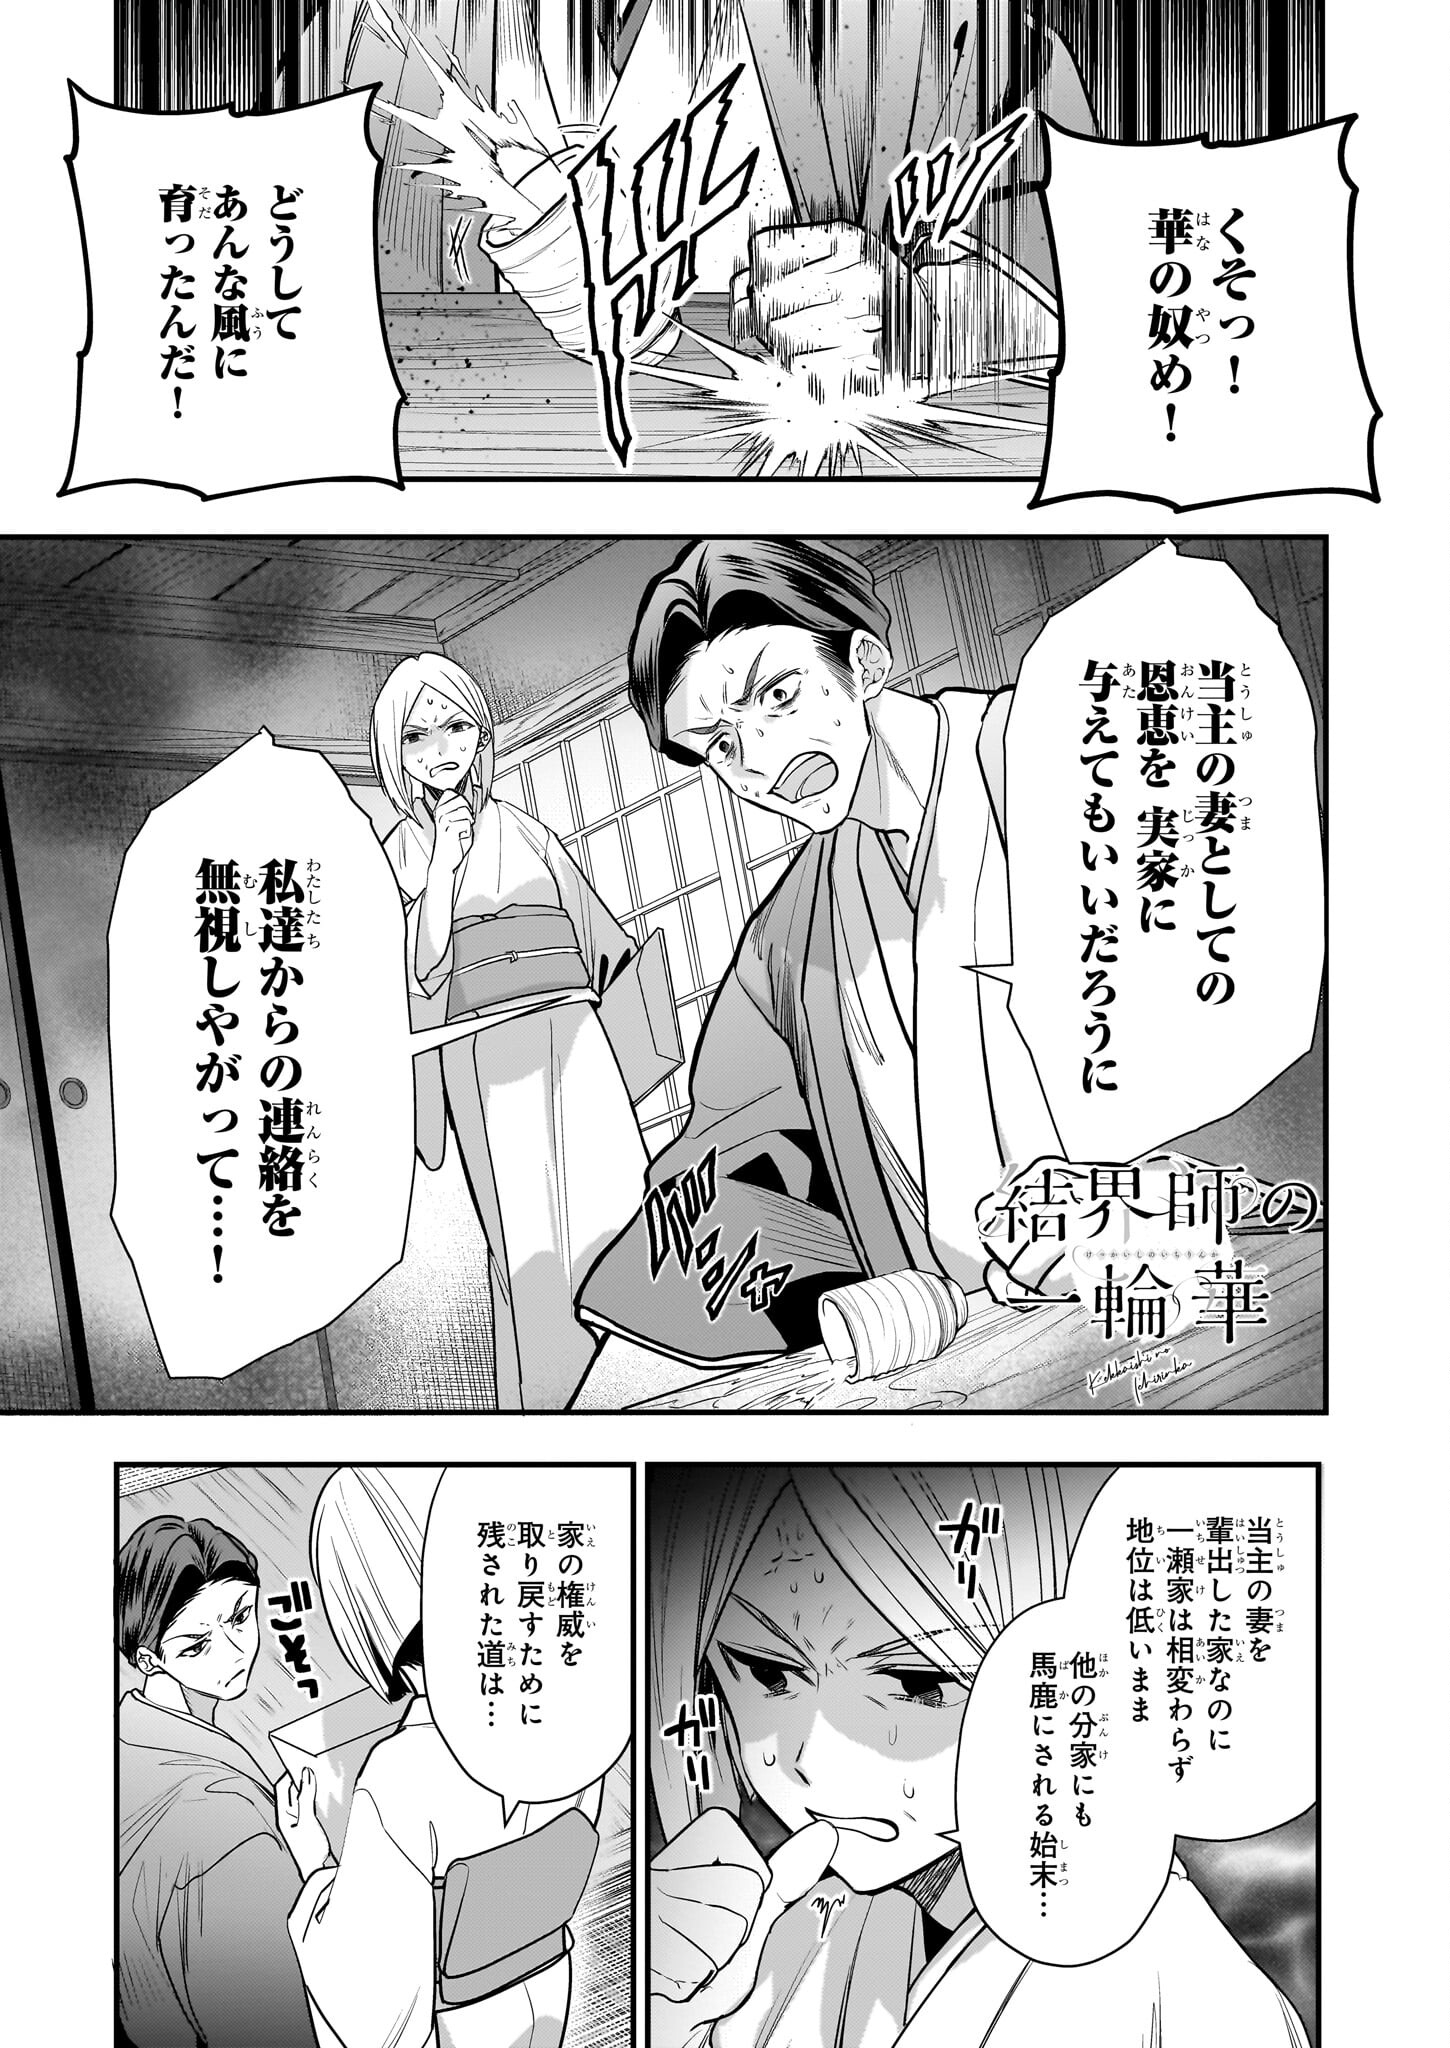 Kekkaishi no Ichirinka - Chapter 13 - Page 1